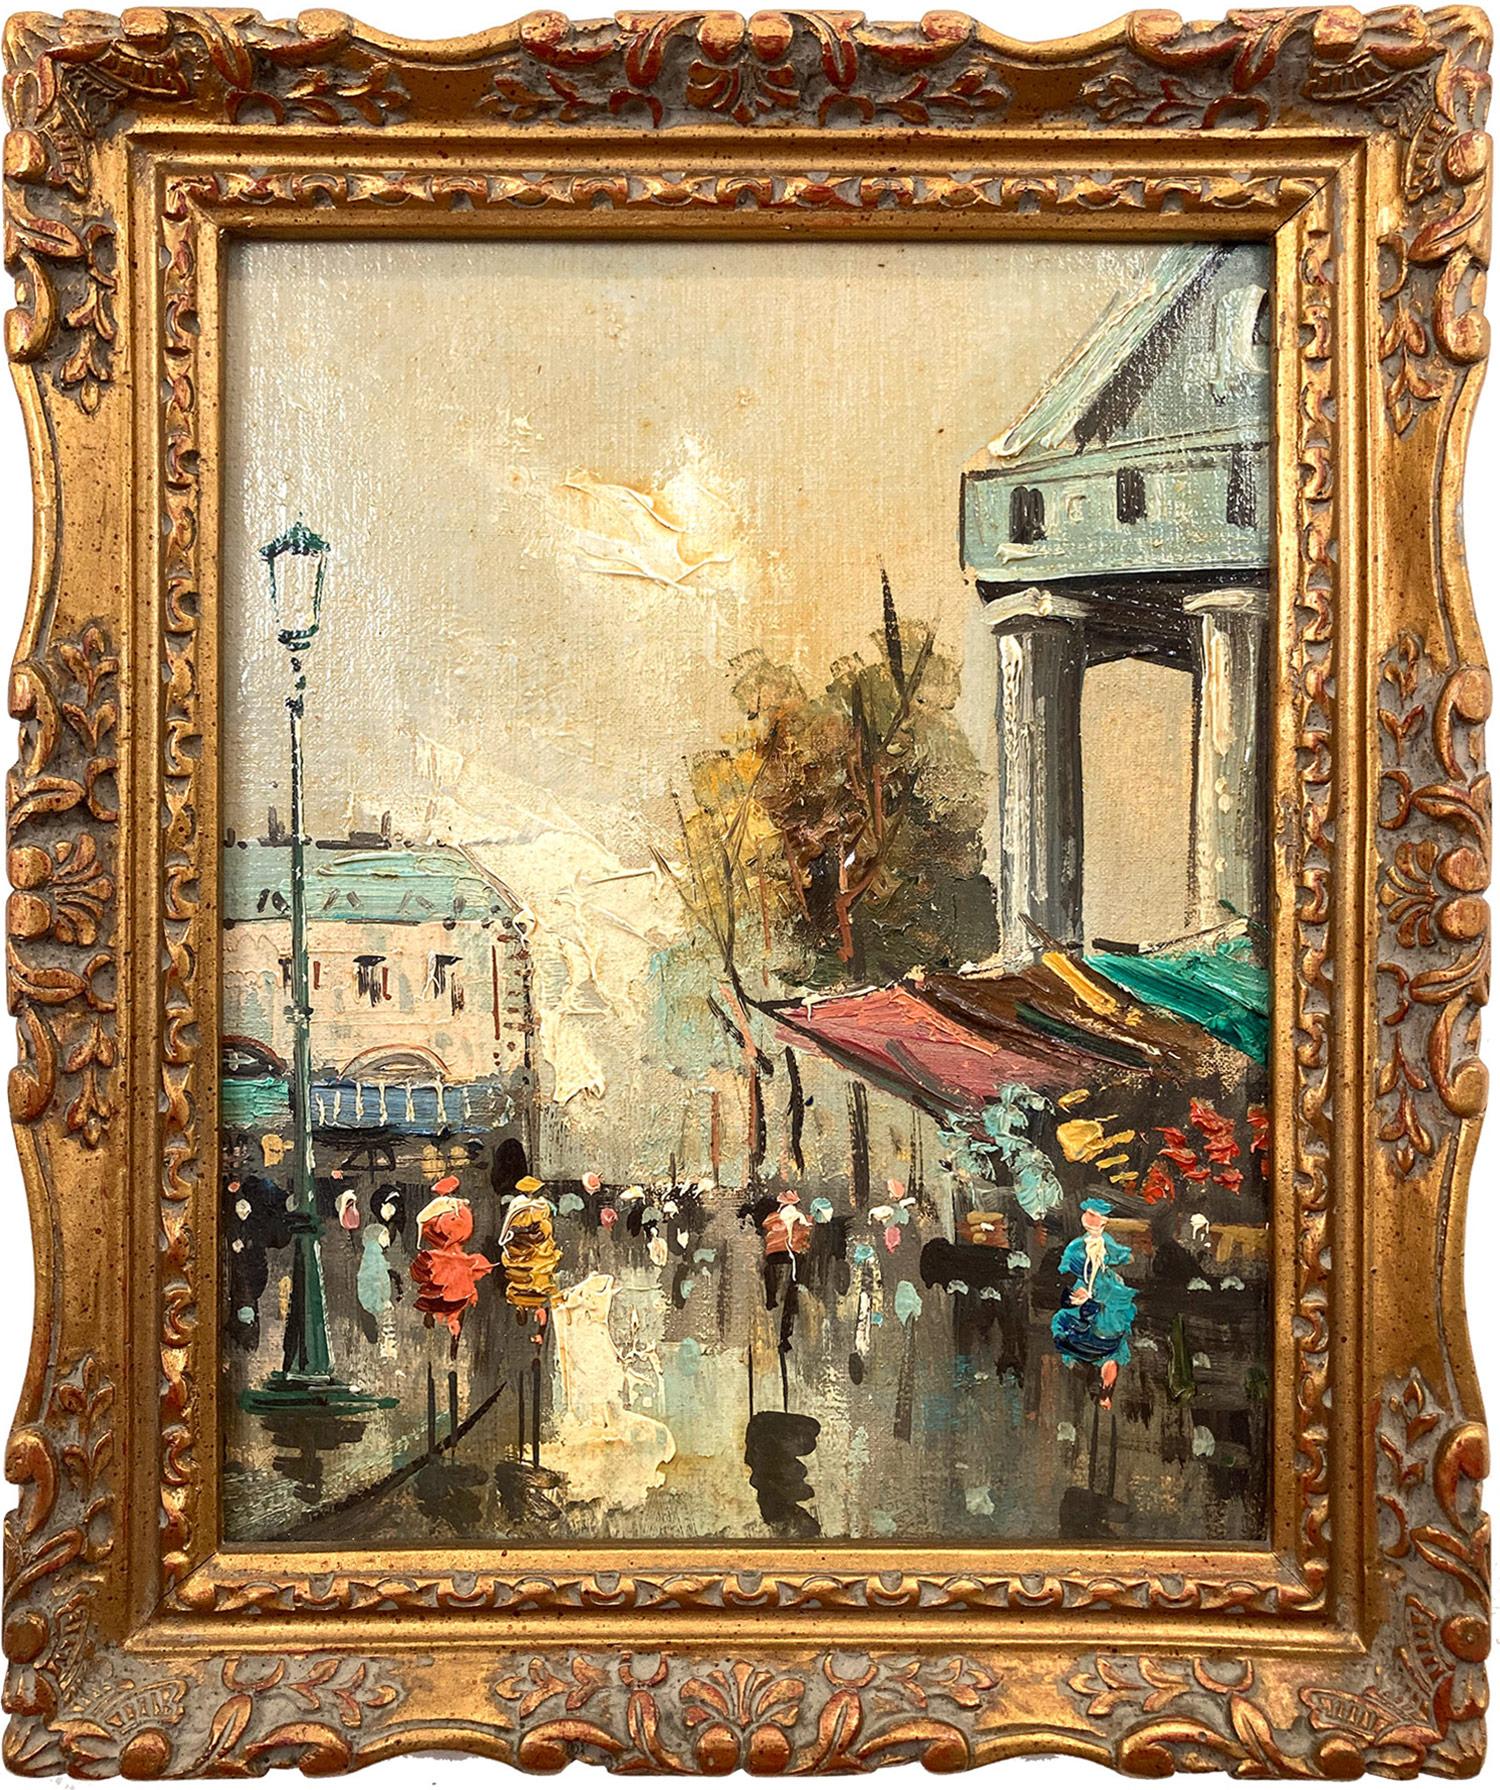 Antonio DeVity Figurative Painting - "La Madeleine" Impressionist 20th Century Parisian Street Scene Oil Painting